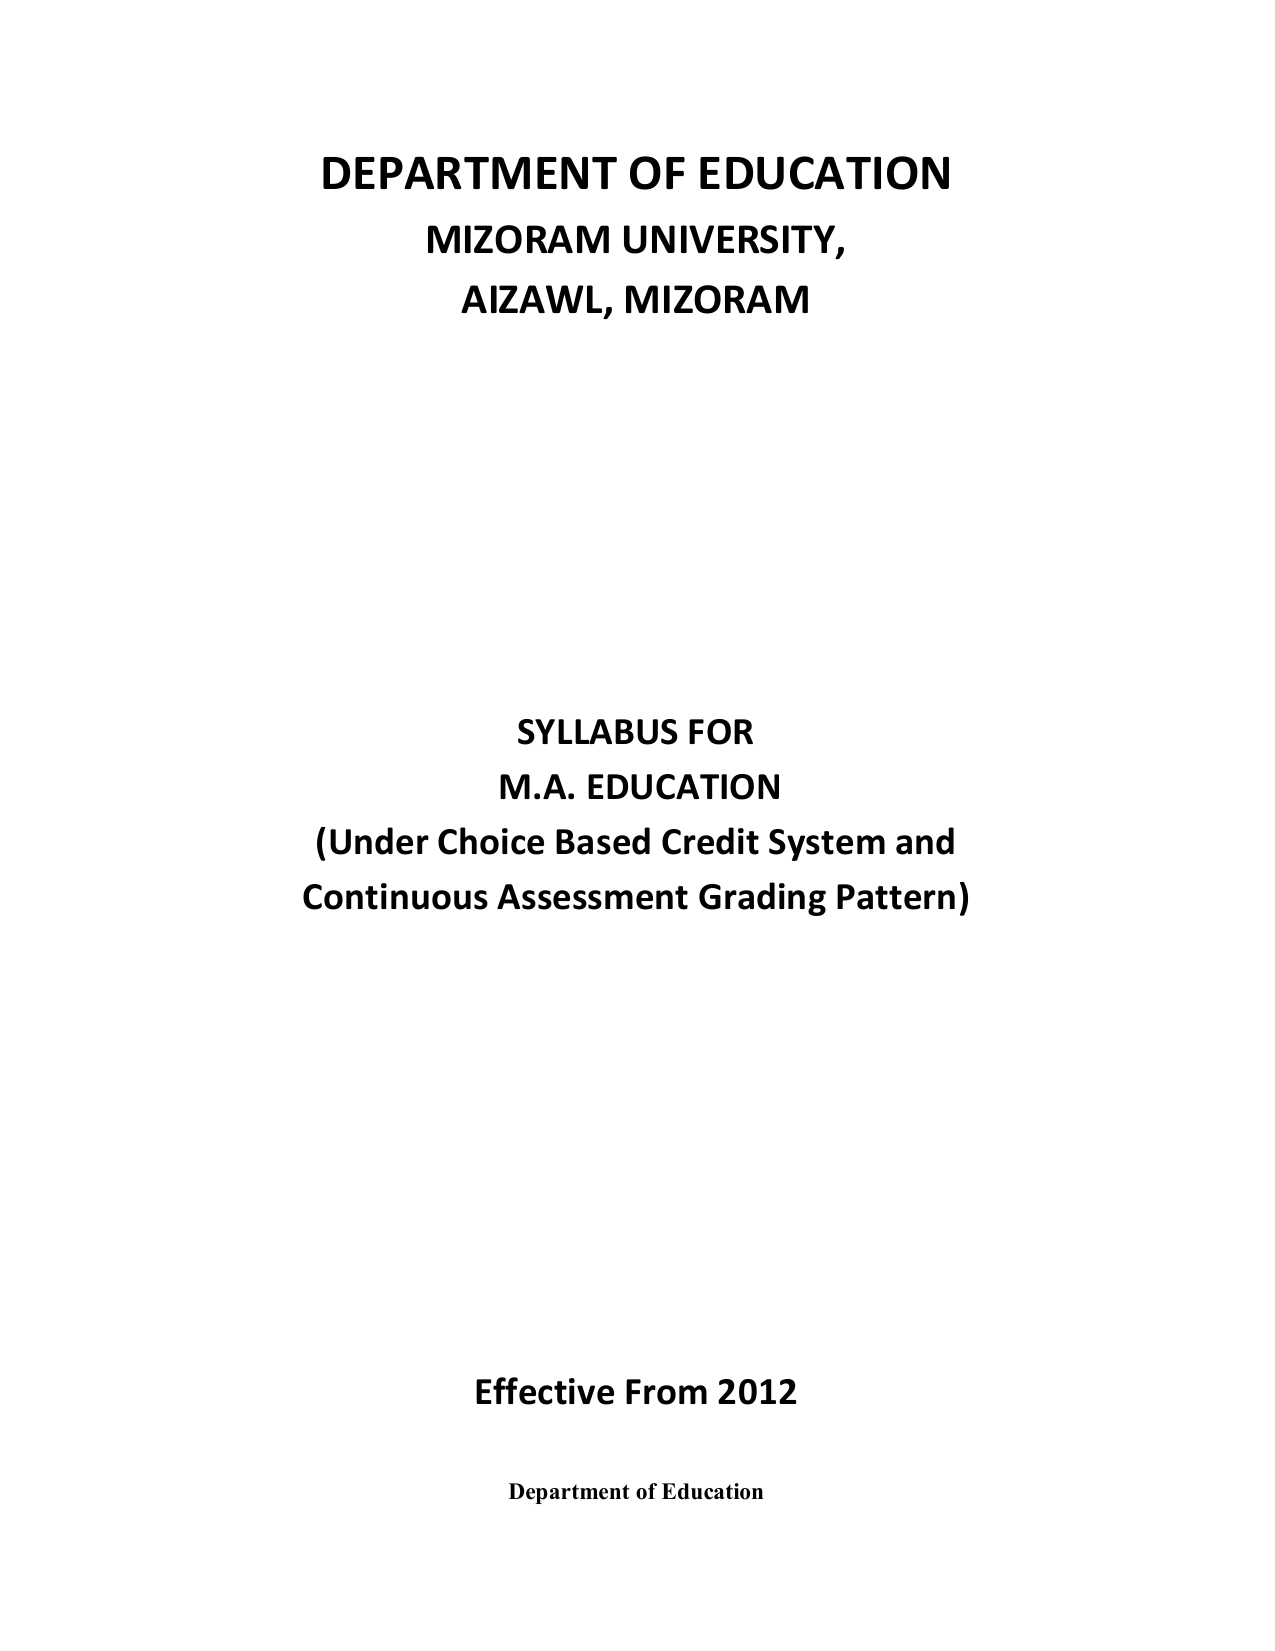 education system in mizoram